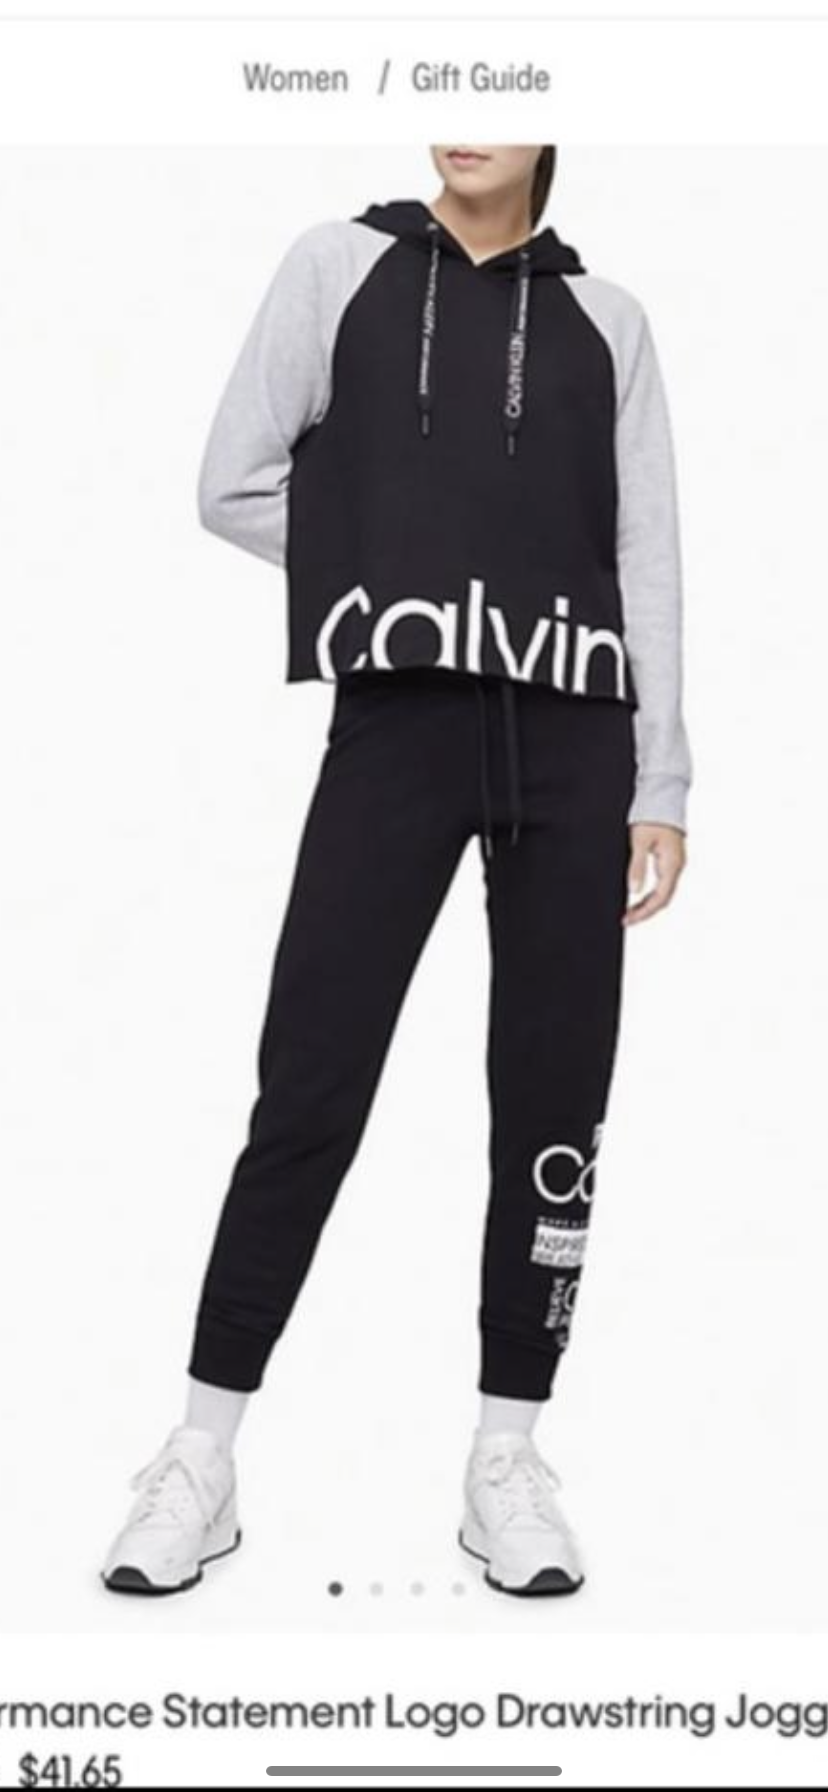 Костюм спортивный Calvin Klein размер M